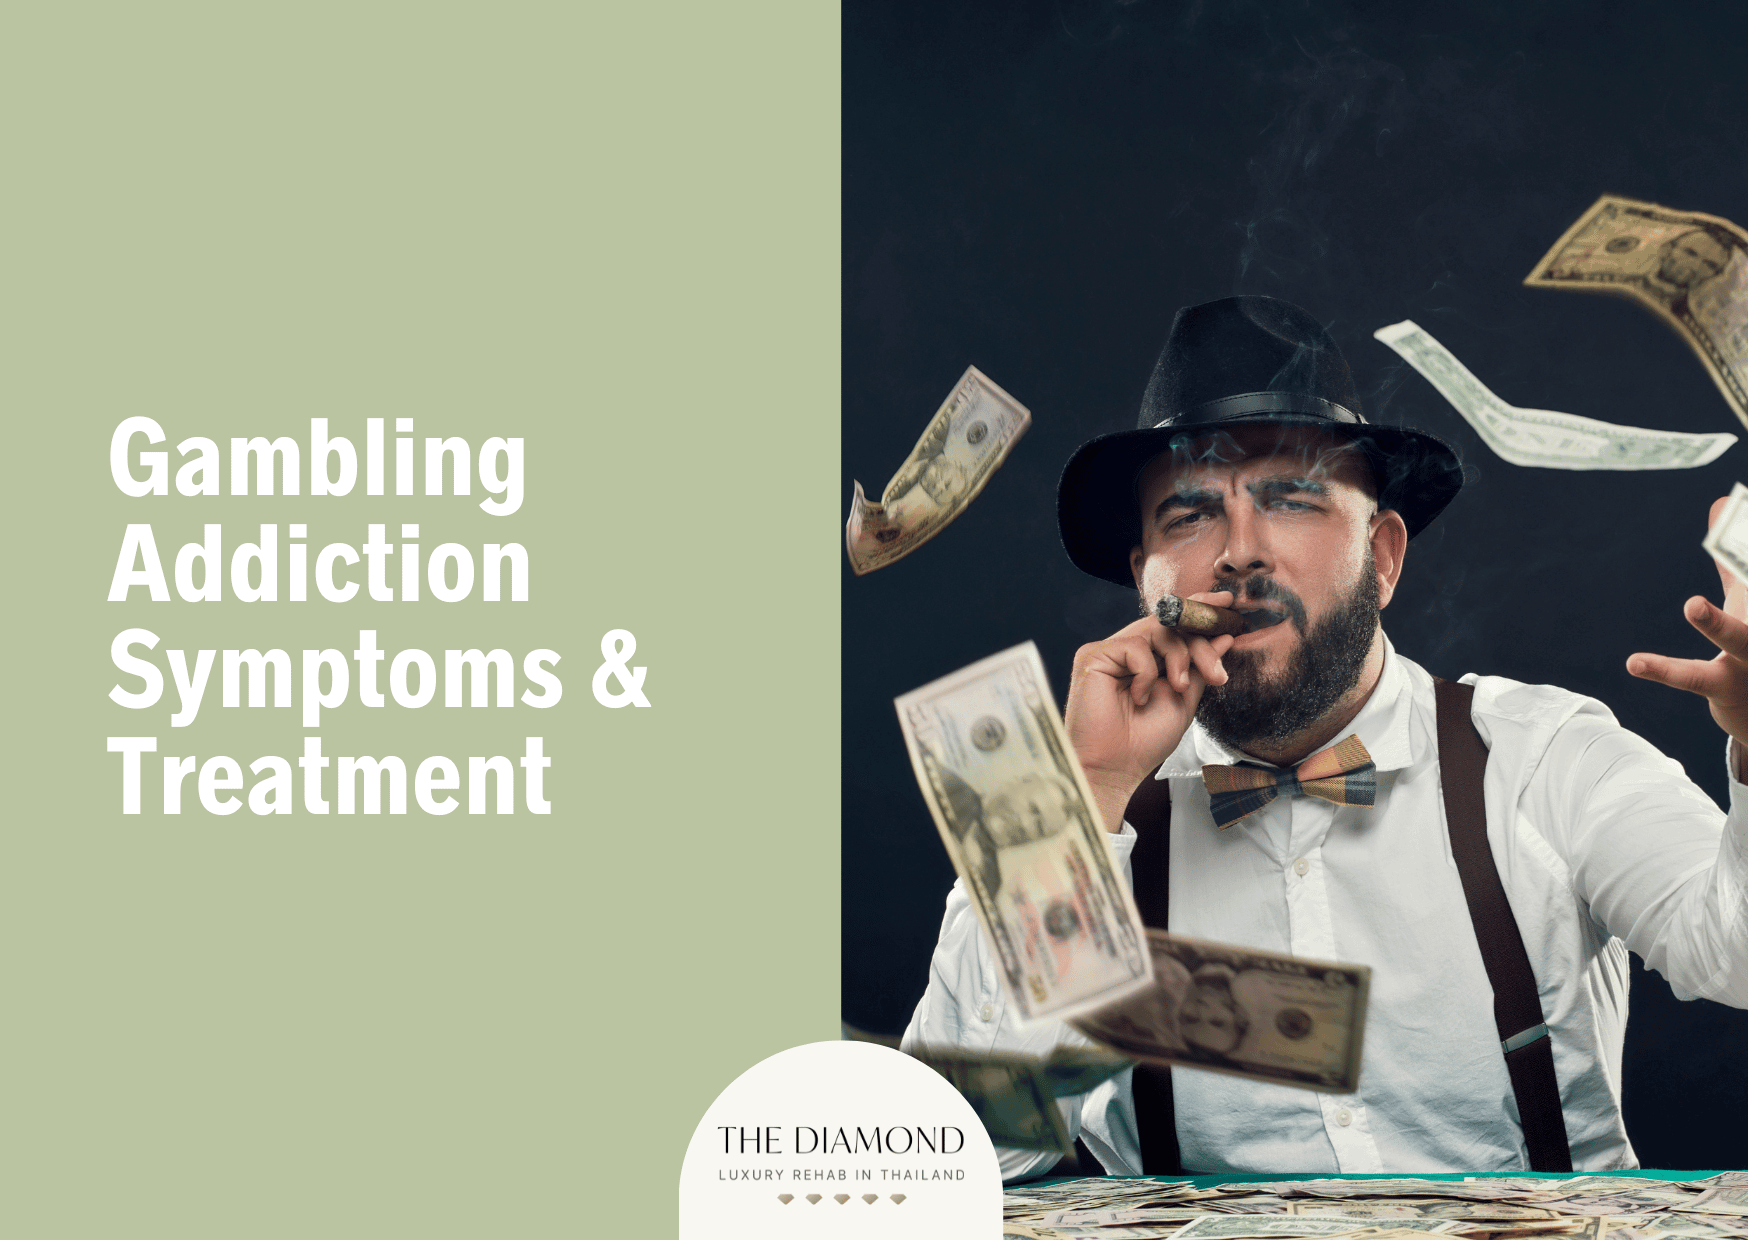 Gambling addiction symptoms and treatment